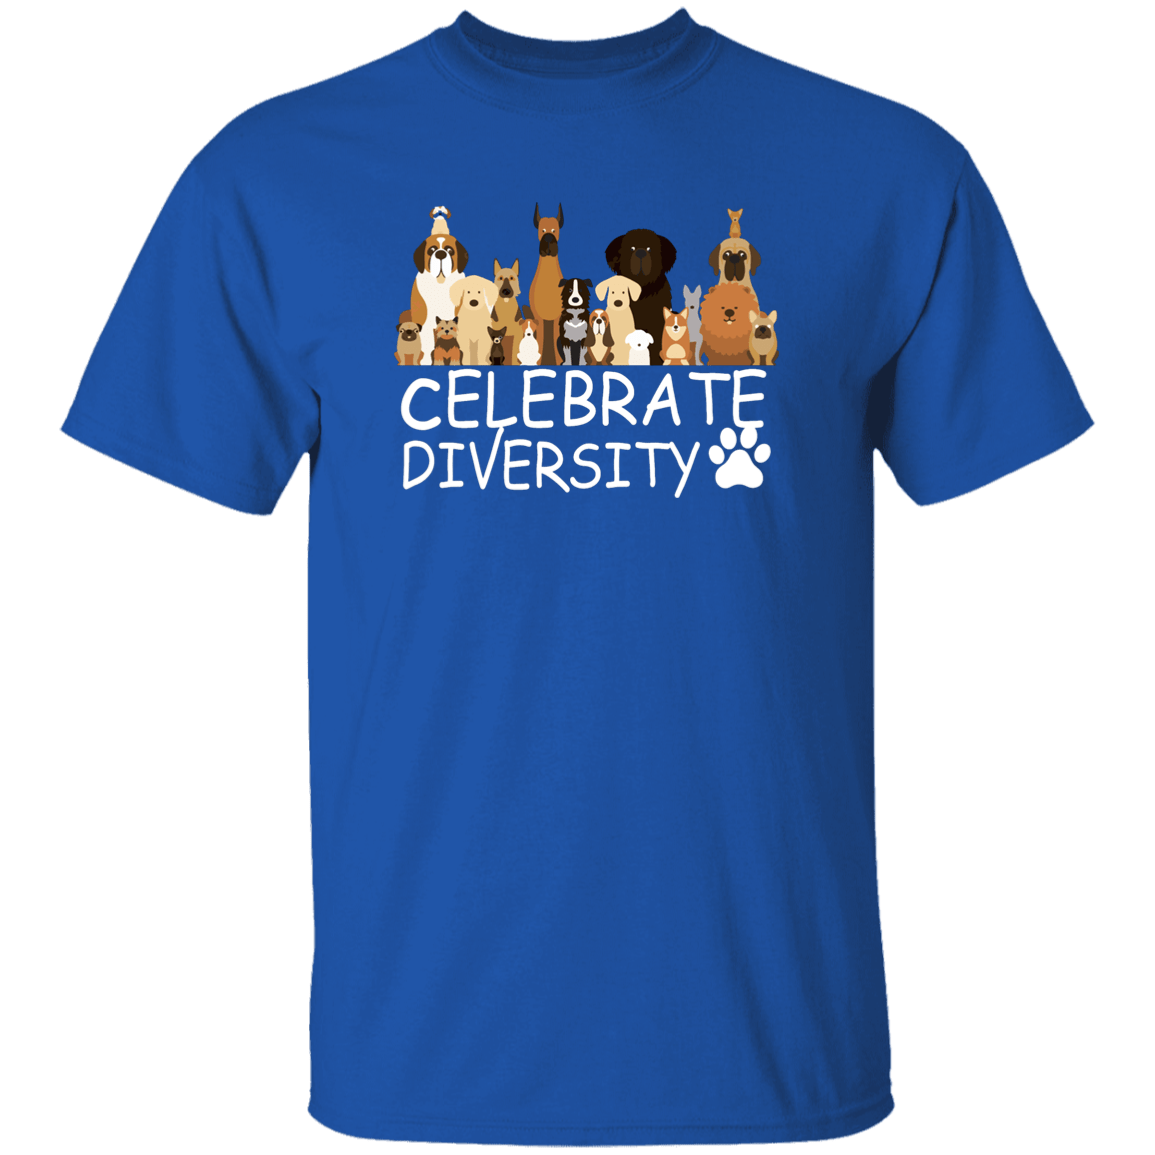 Celebrate Diversity - T Shirt.